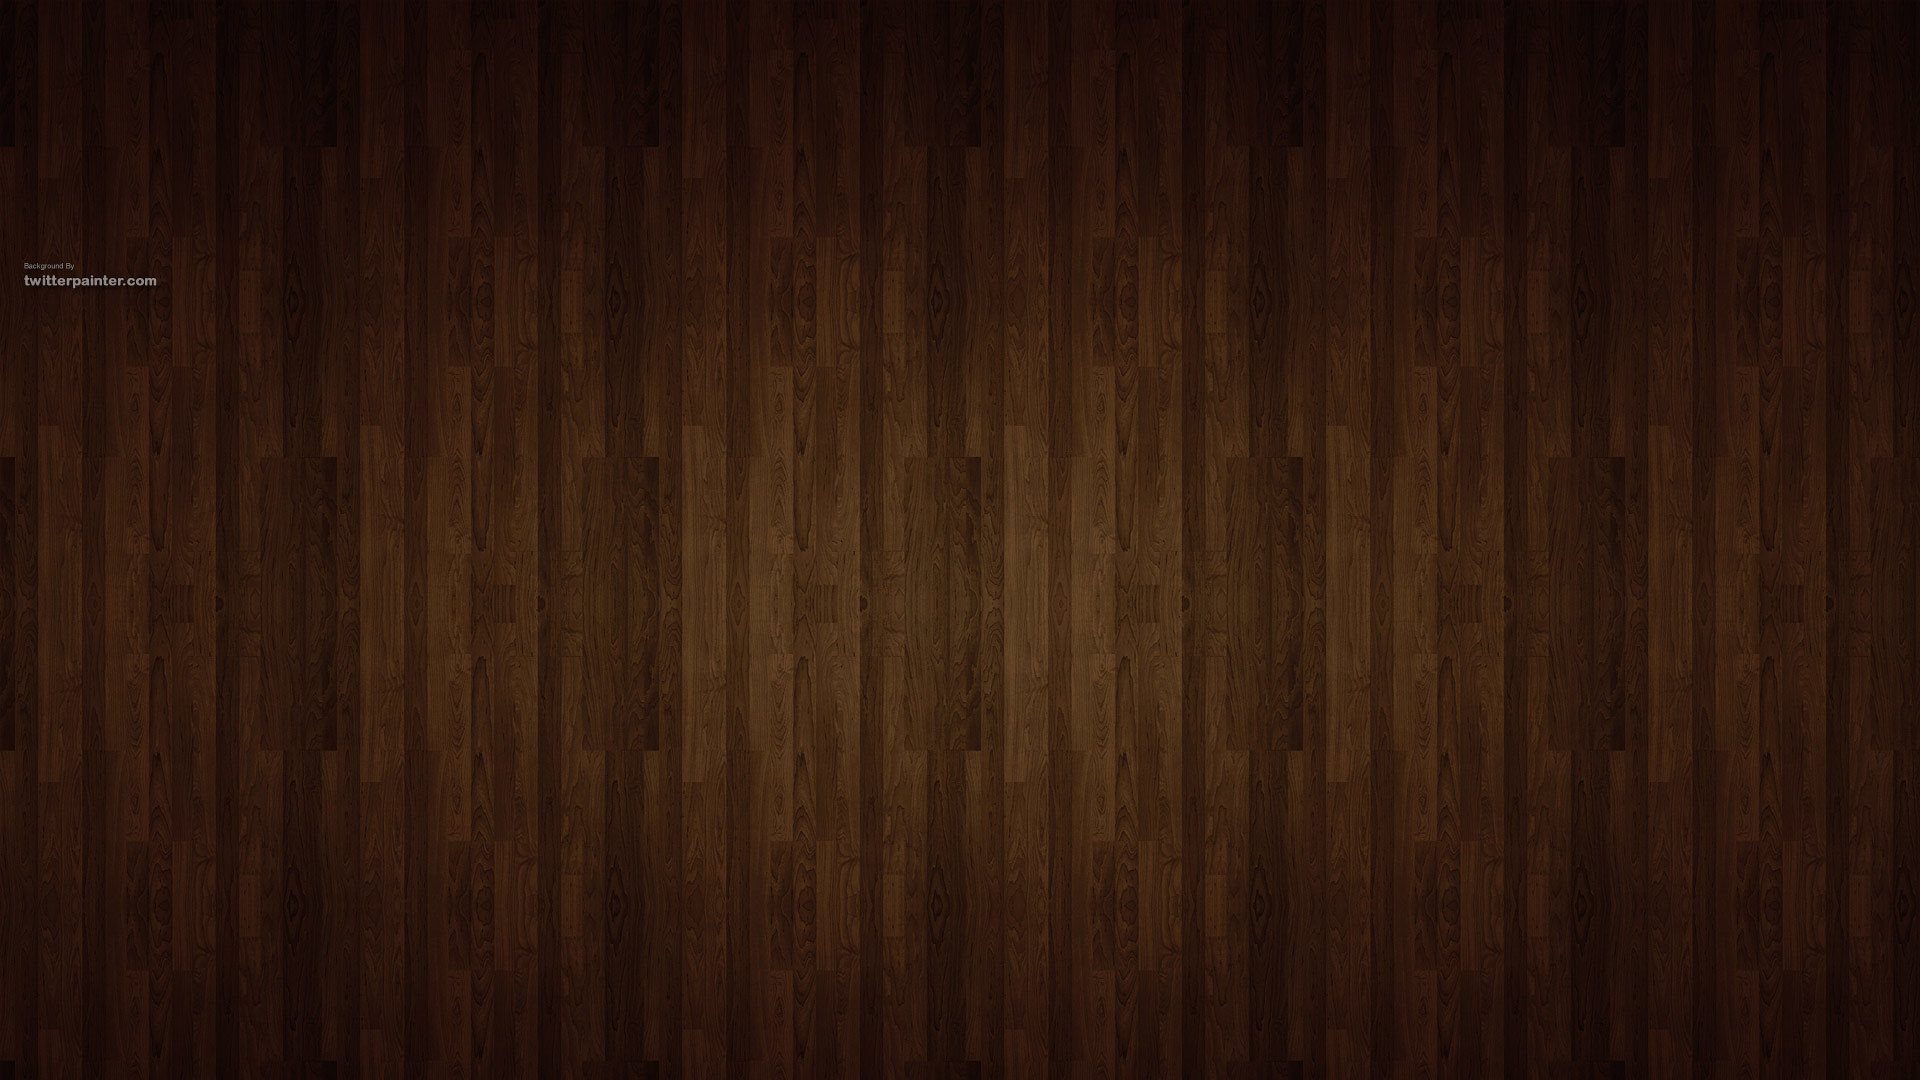 1920x1080 Enjoyable Ideas Wood Floors Background 22 Dark Wood Floor Background New  Floors Hd Wallpapers 3866778693 With ...